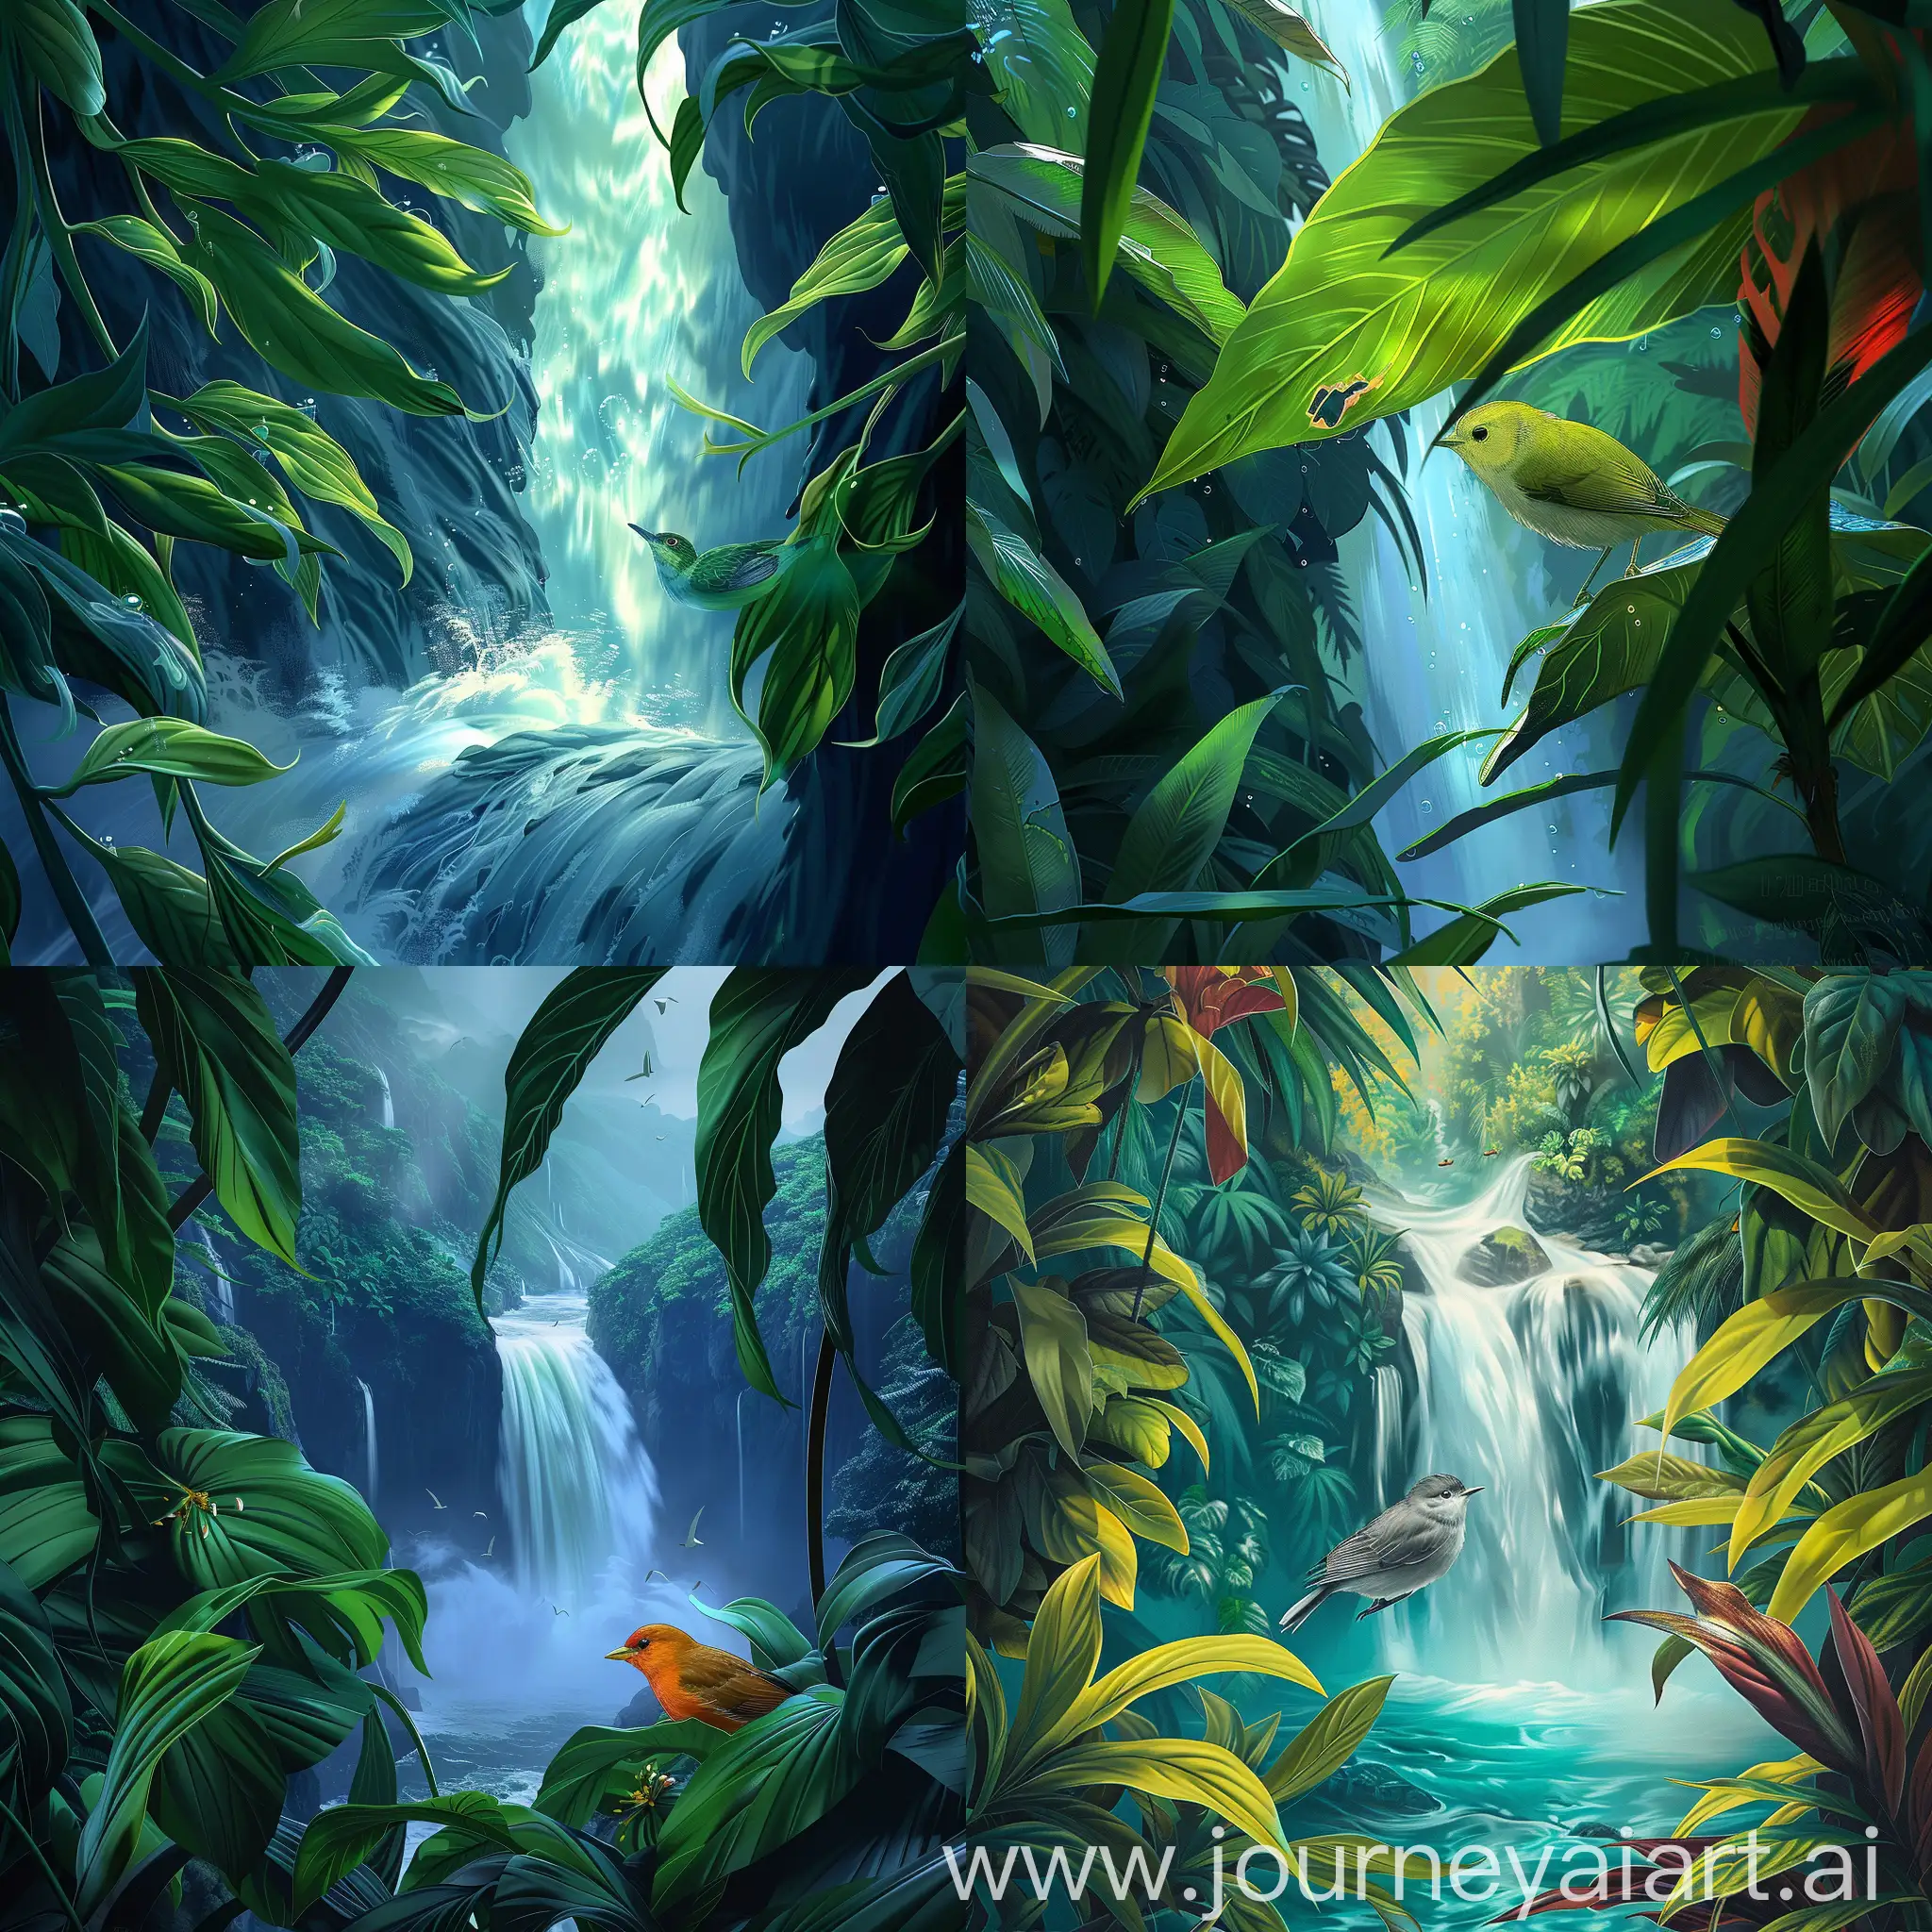 Tropical-Bird-Peeking-Through-Lush-Foliage-Vibrant-Digital-Art-by-Stanley-Artgerm-Lau